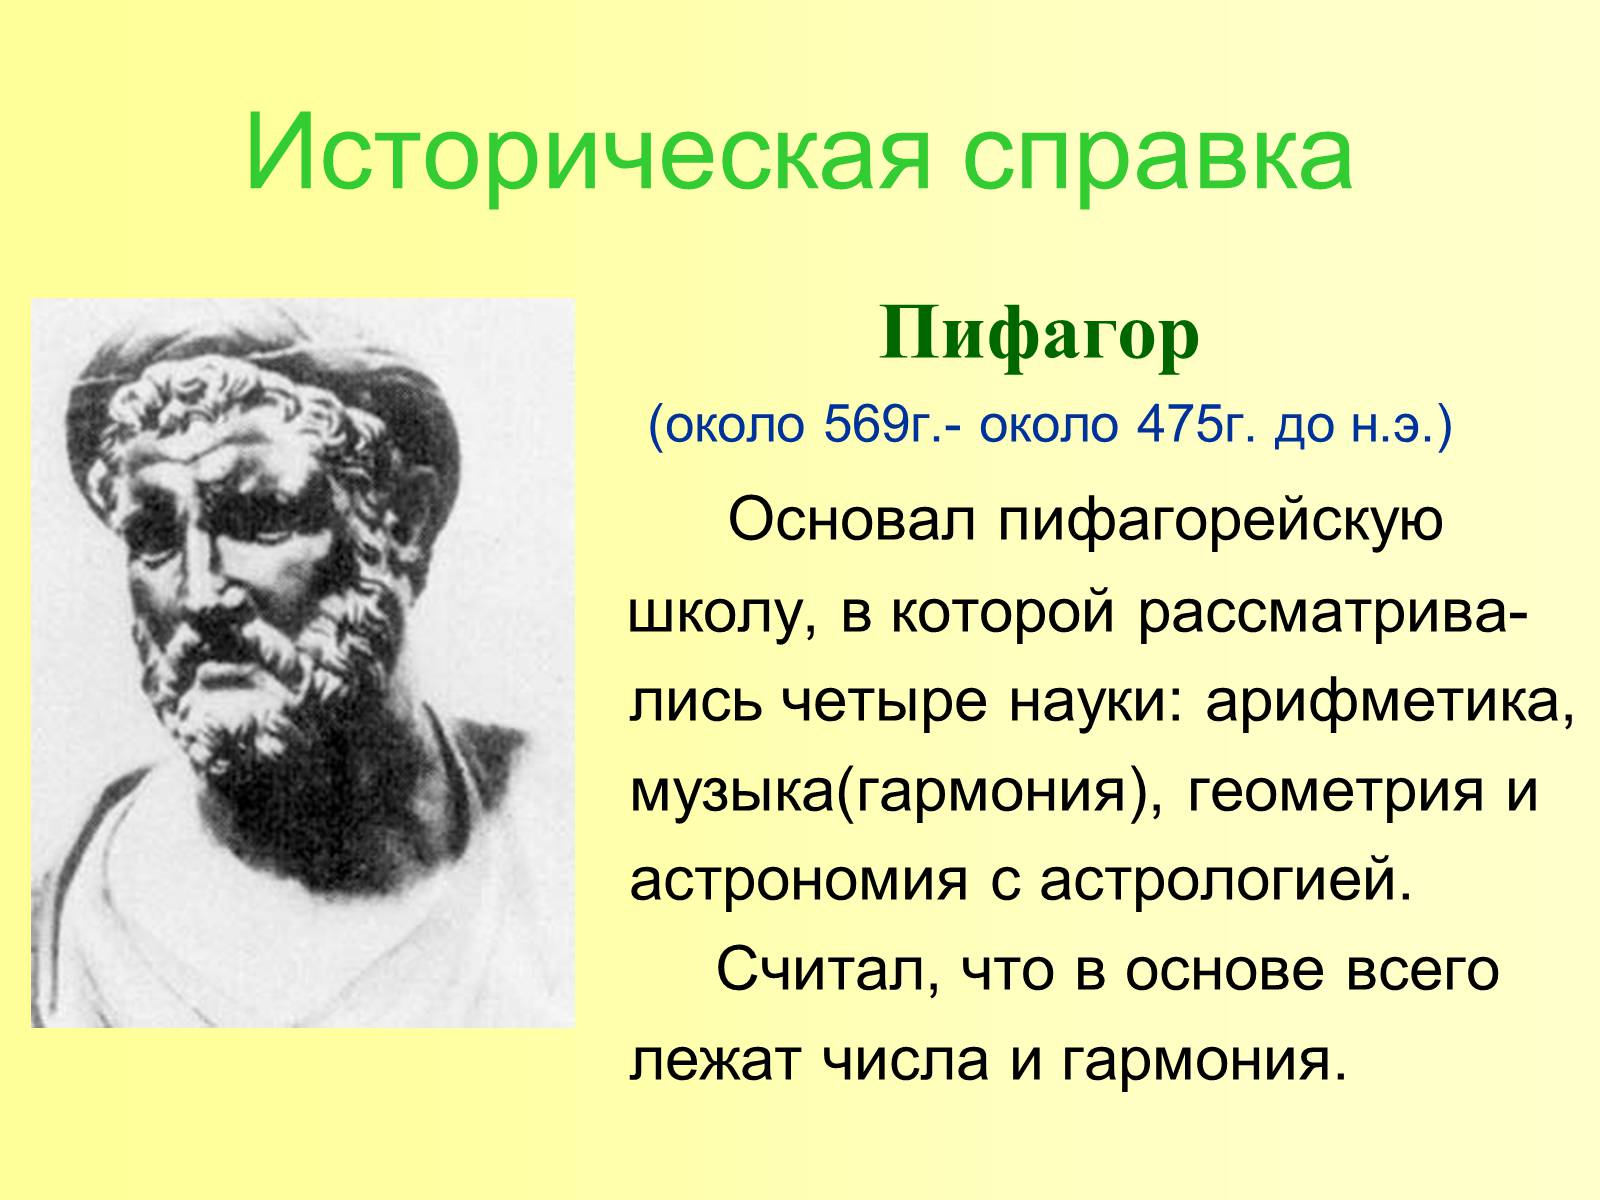 Пифагор (569−475 лет до н. э.)